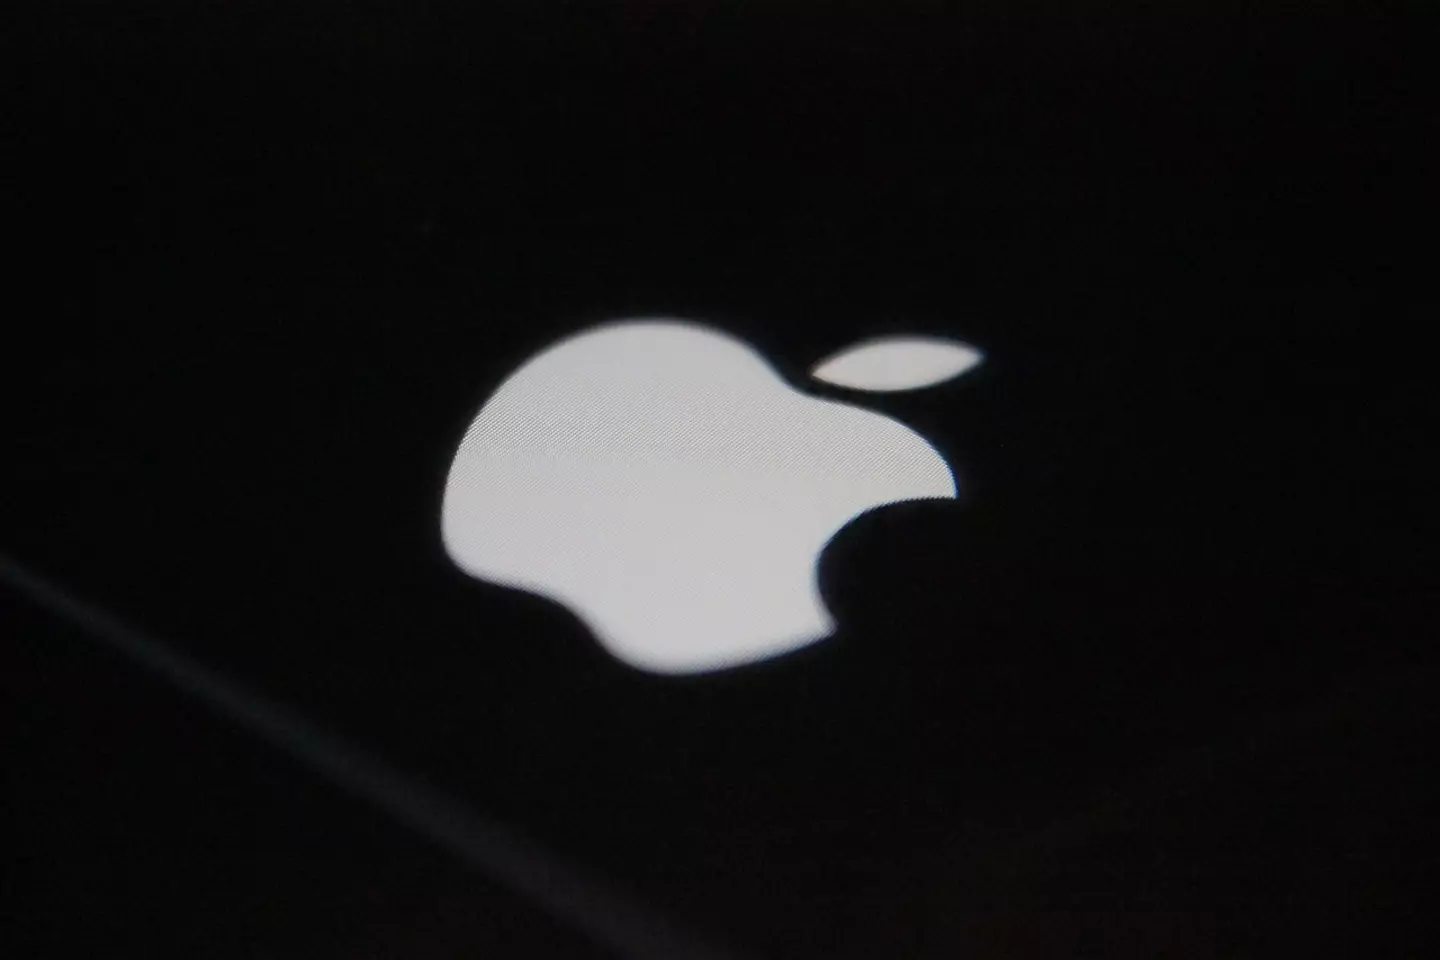 Despite the loss, Apple remain worth trillions of dollars.